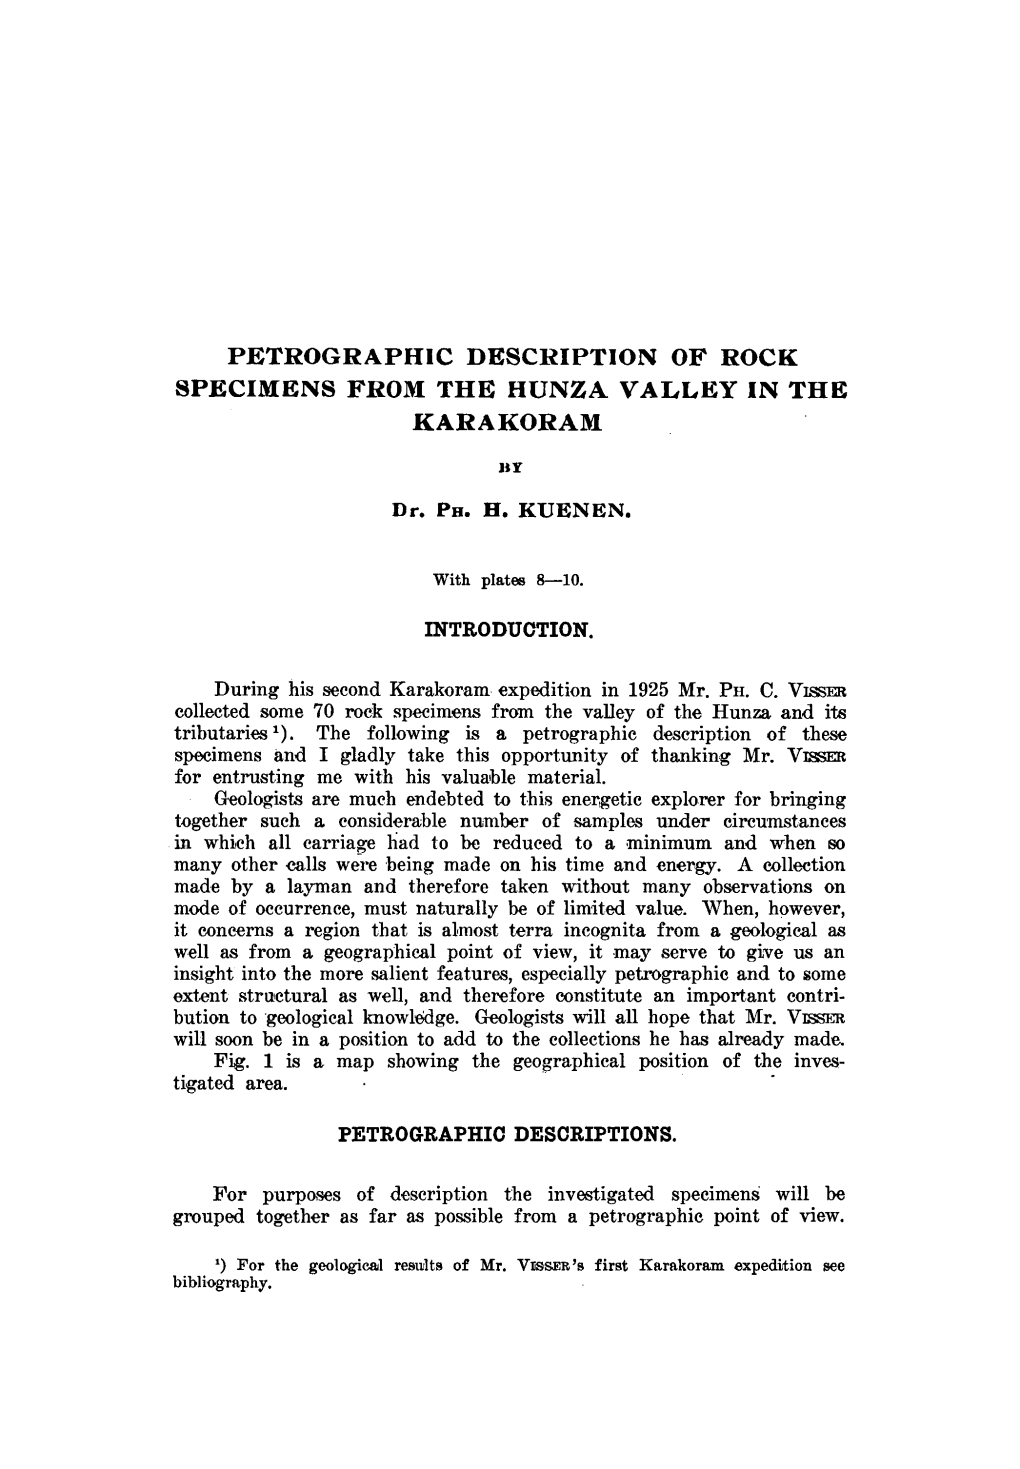 Petrographic Description of Specimens from the Hunza Valley Karakoram